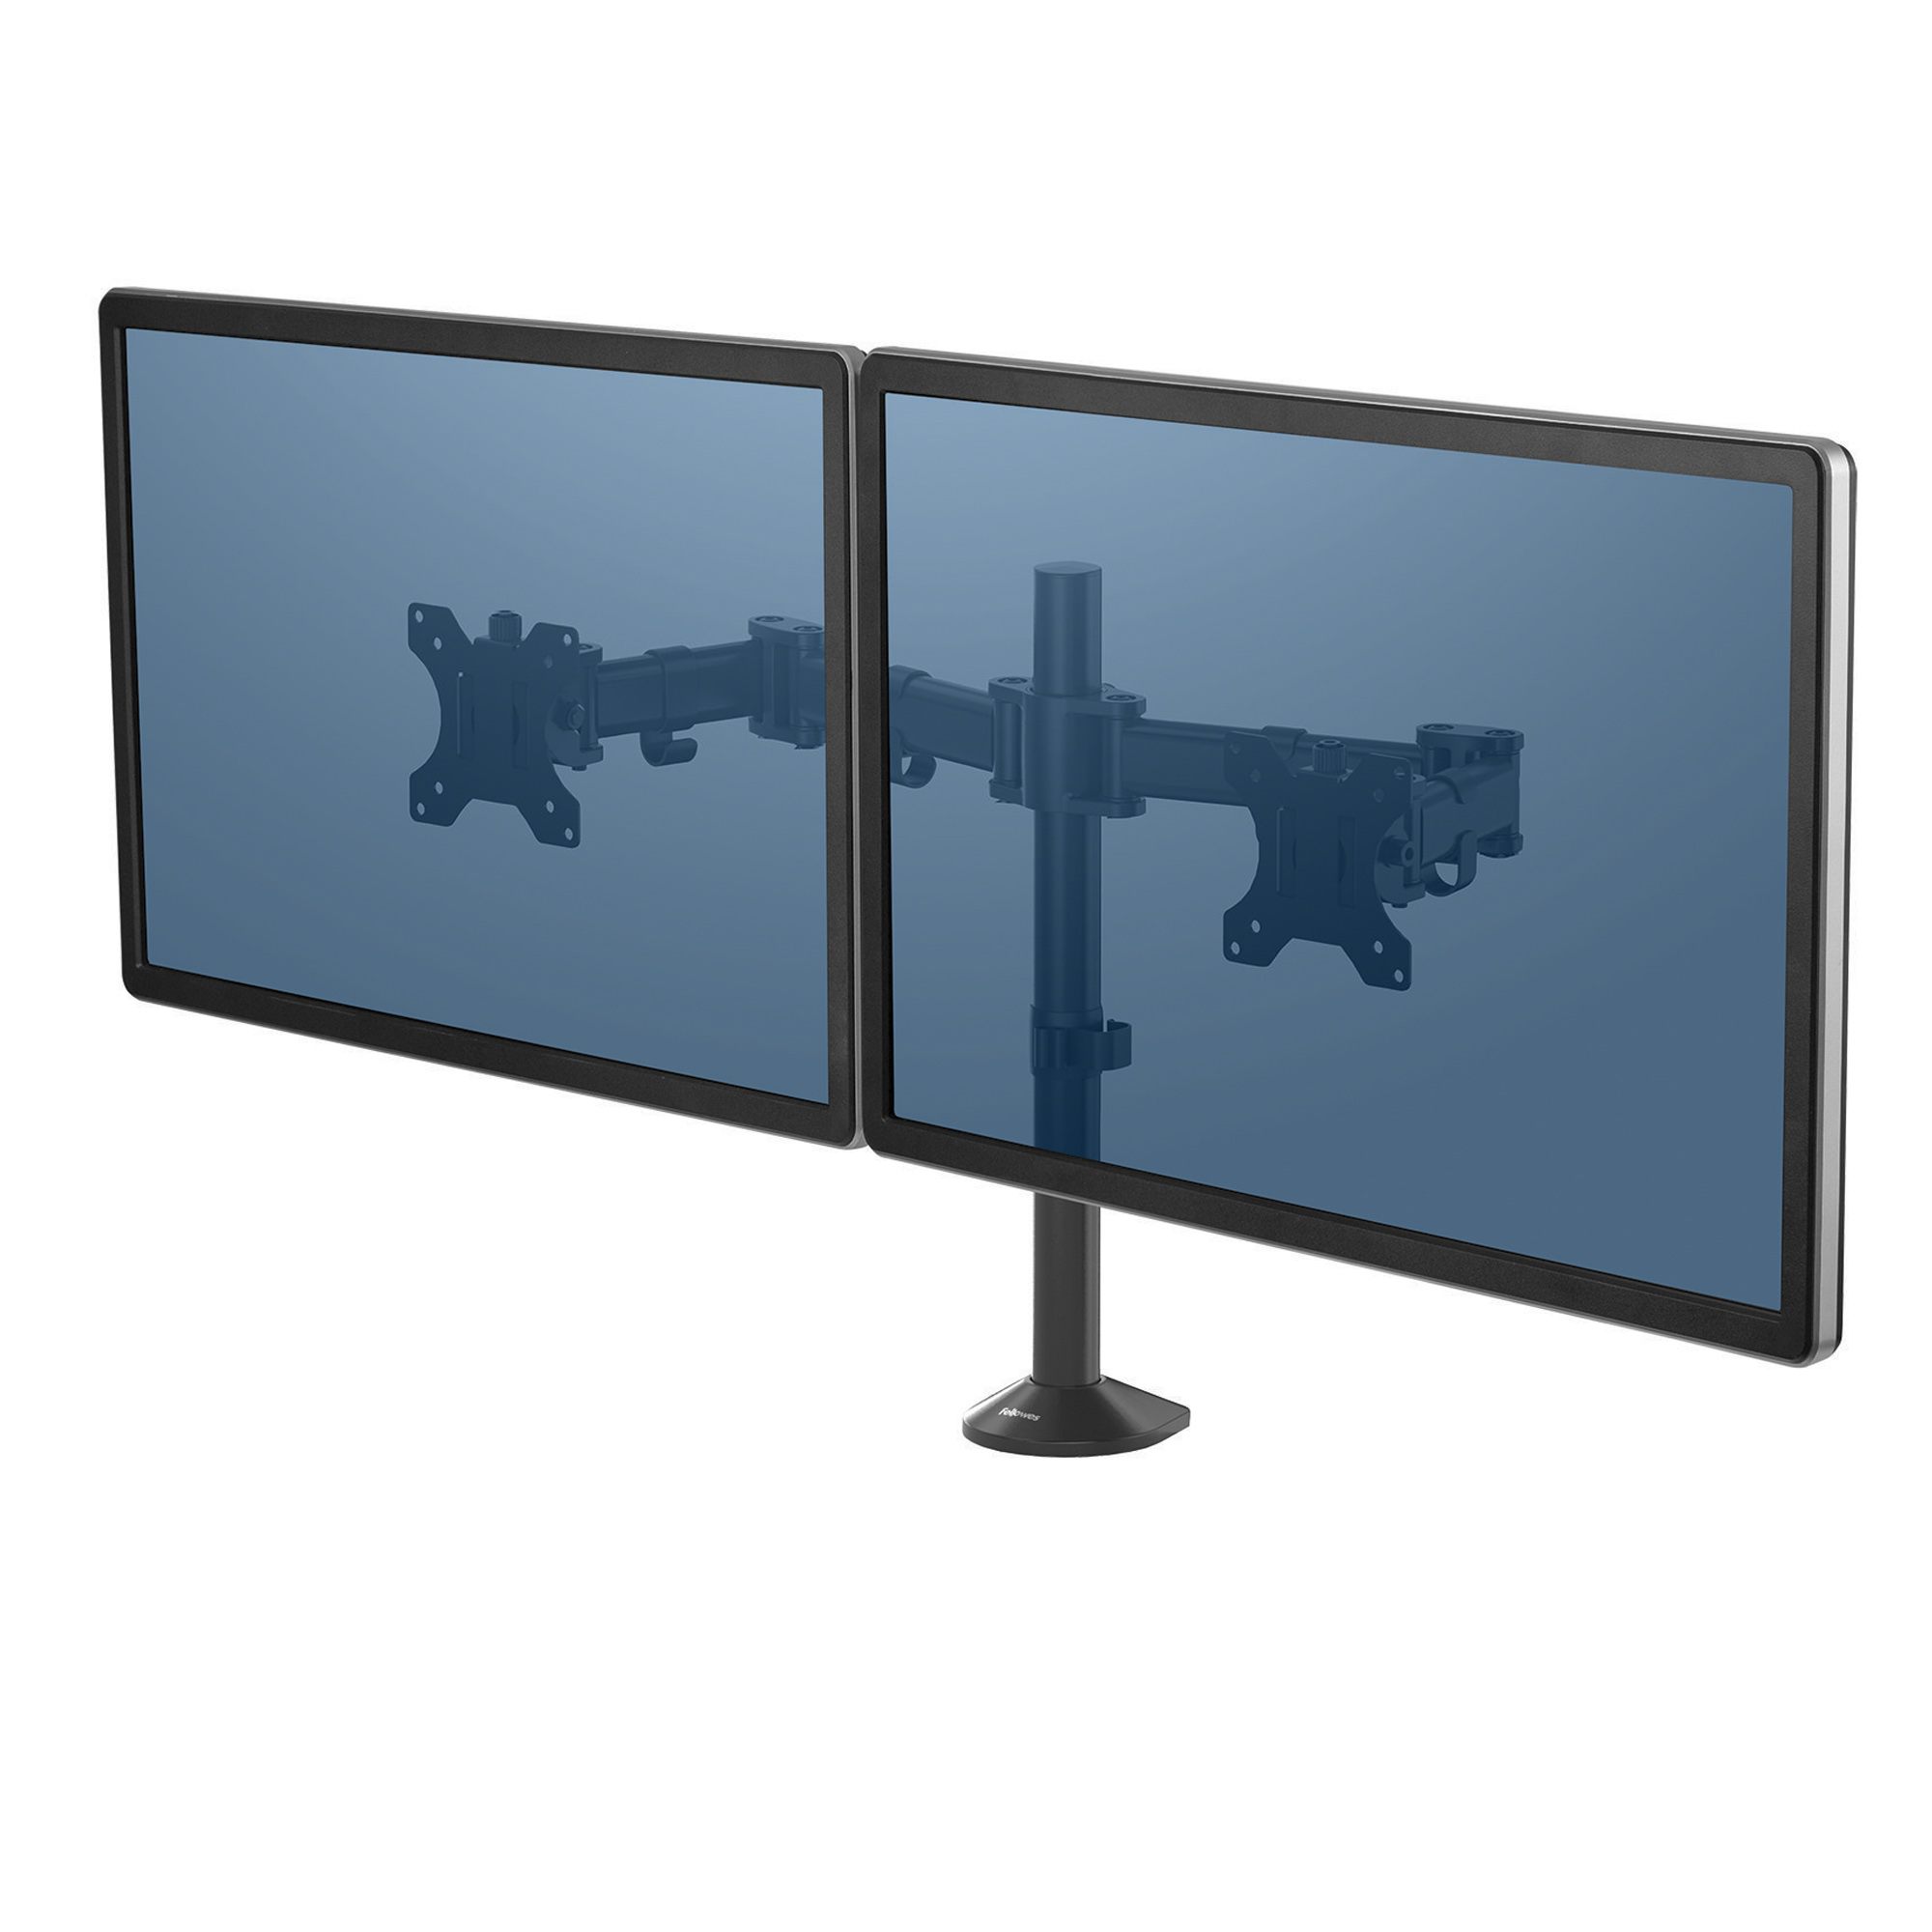 Bracci porta monitor Reflex Series - doppio - 55x11,6x72,6cm - Fellowes